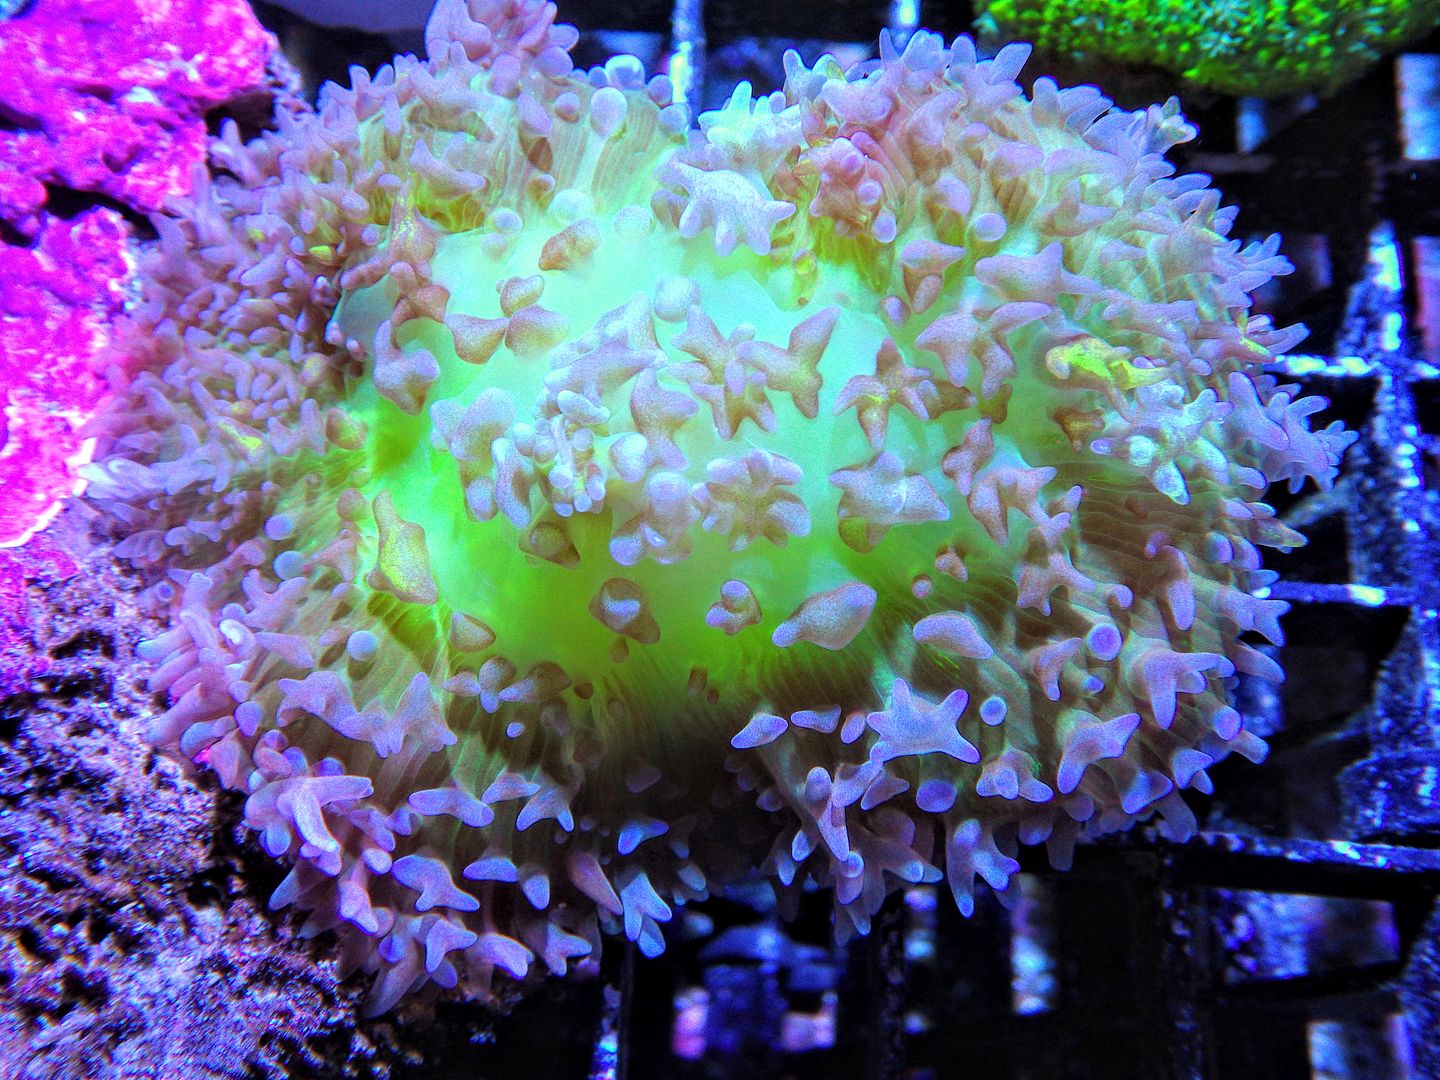 RIMG85703 zpsklzdcyac - New Mushrooms & Pieces of The Reef